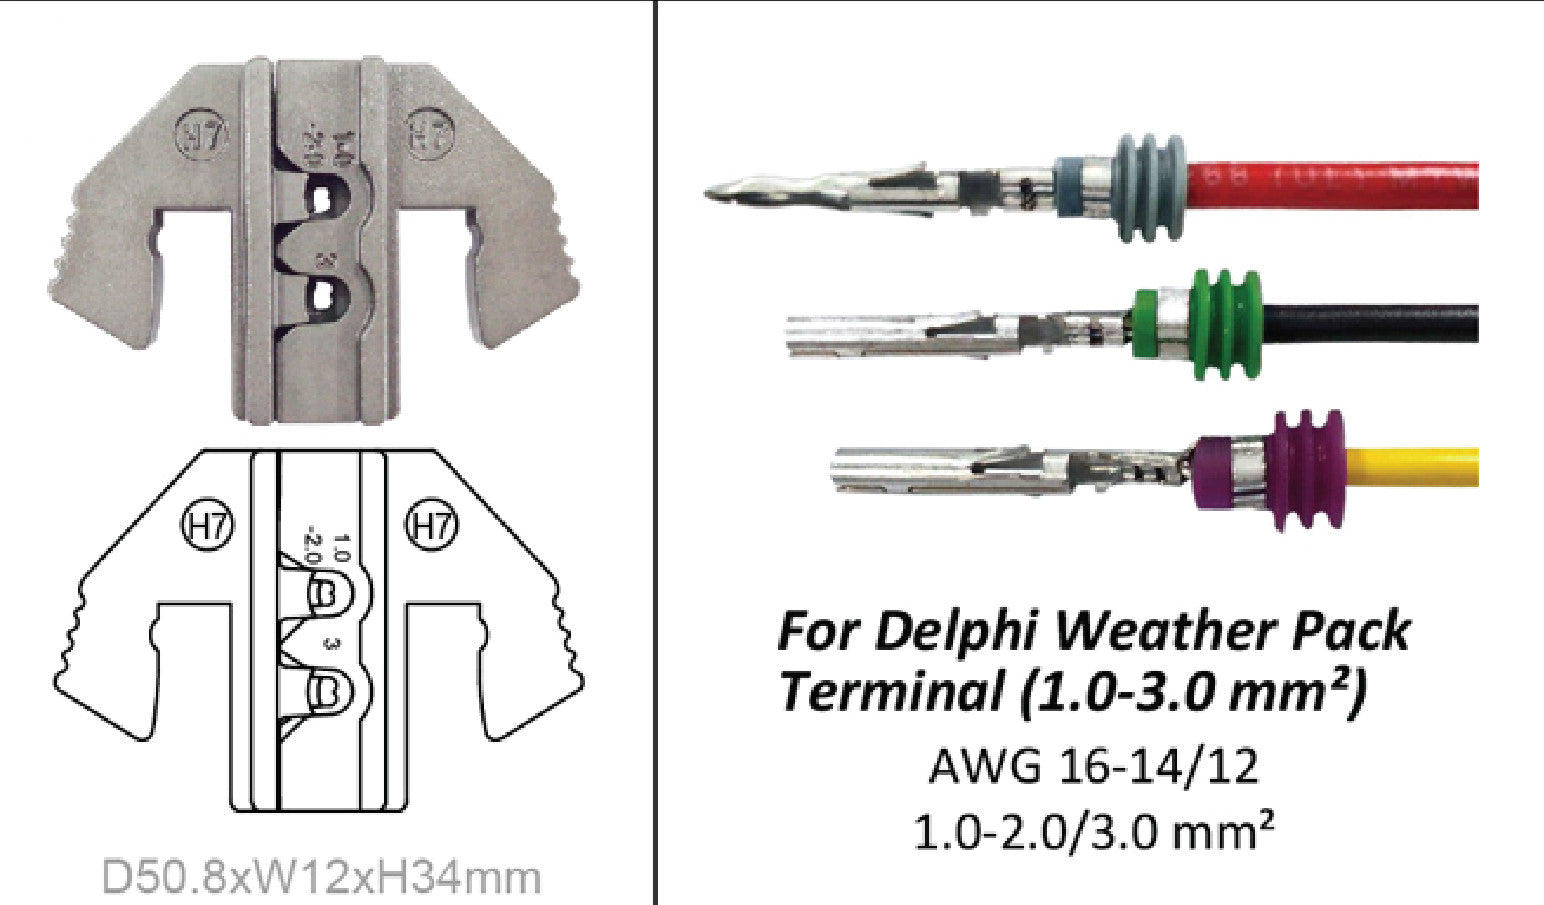 Crimping Tool Die - H7 Die for Delphi Weather Pack Terminal AWG 16-14/12